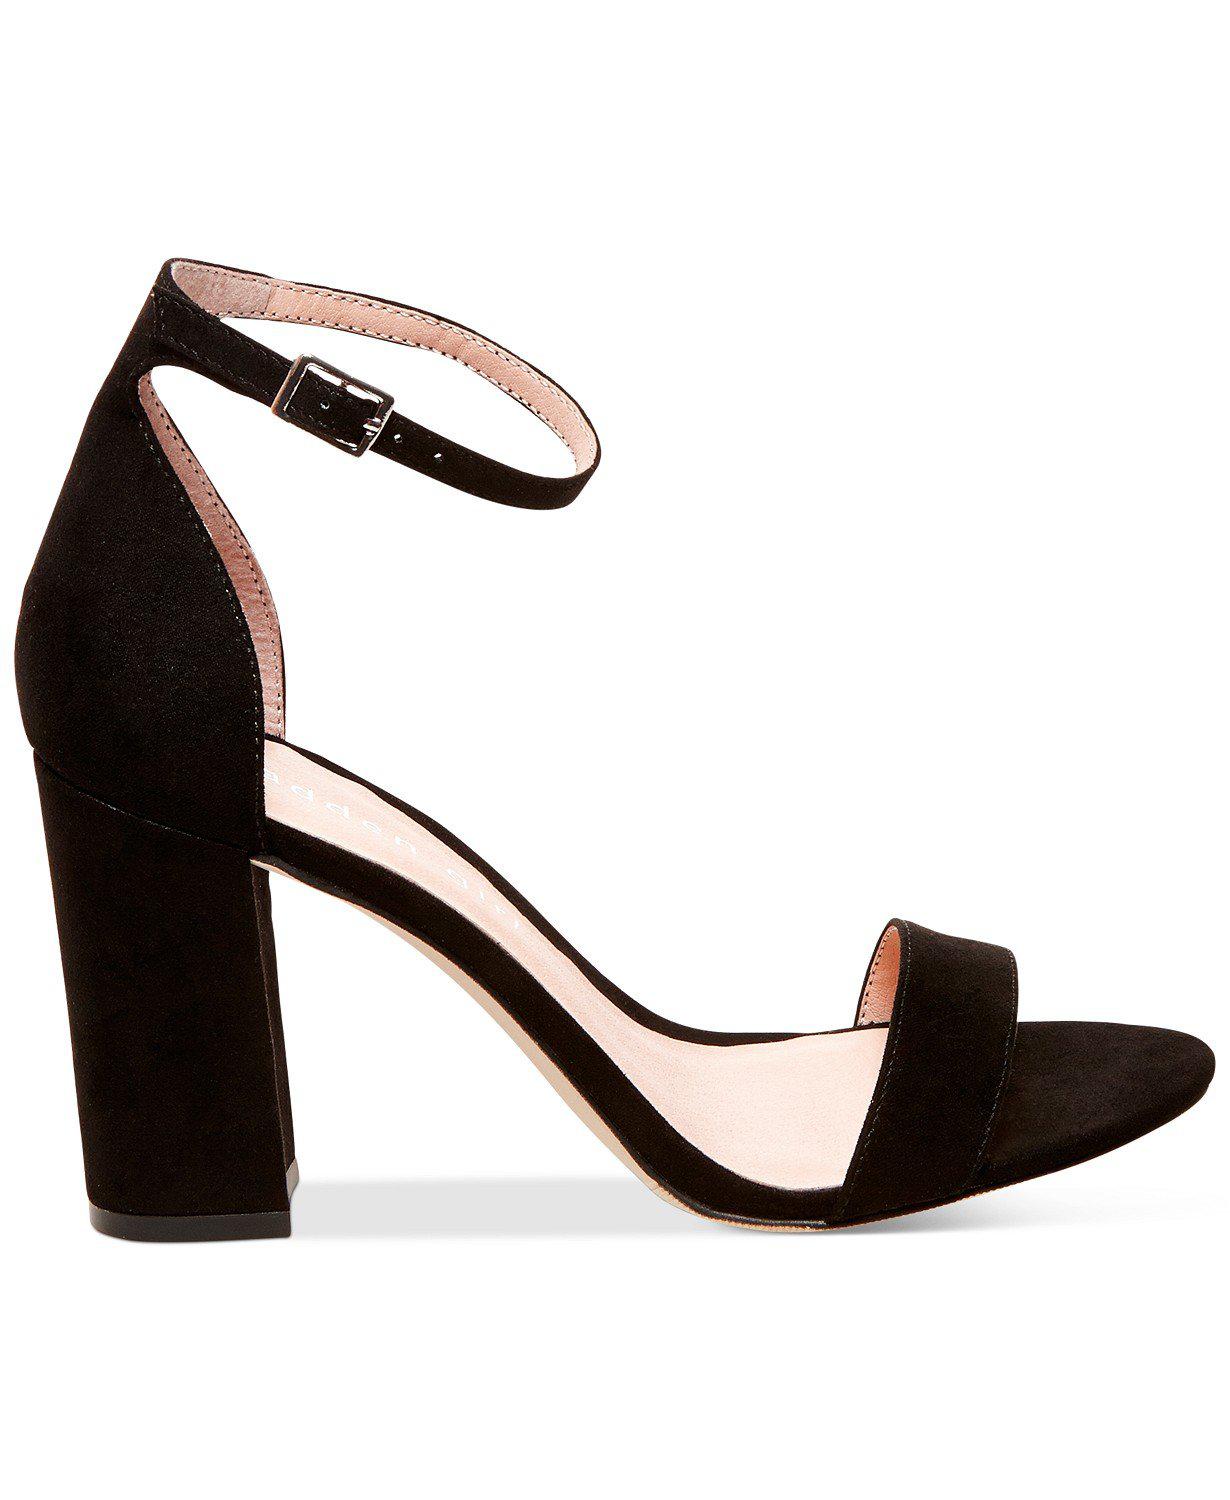 Lyst - Madden Girl Bella Two-piece Block Heel Sandals in Black